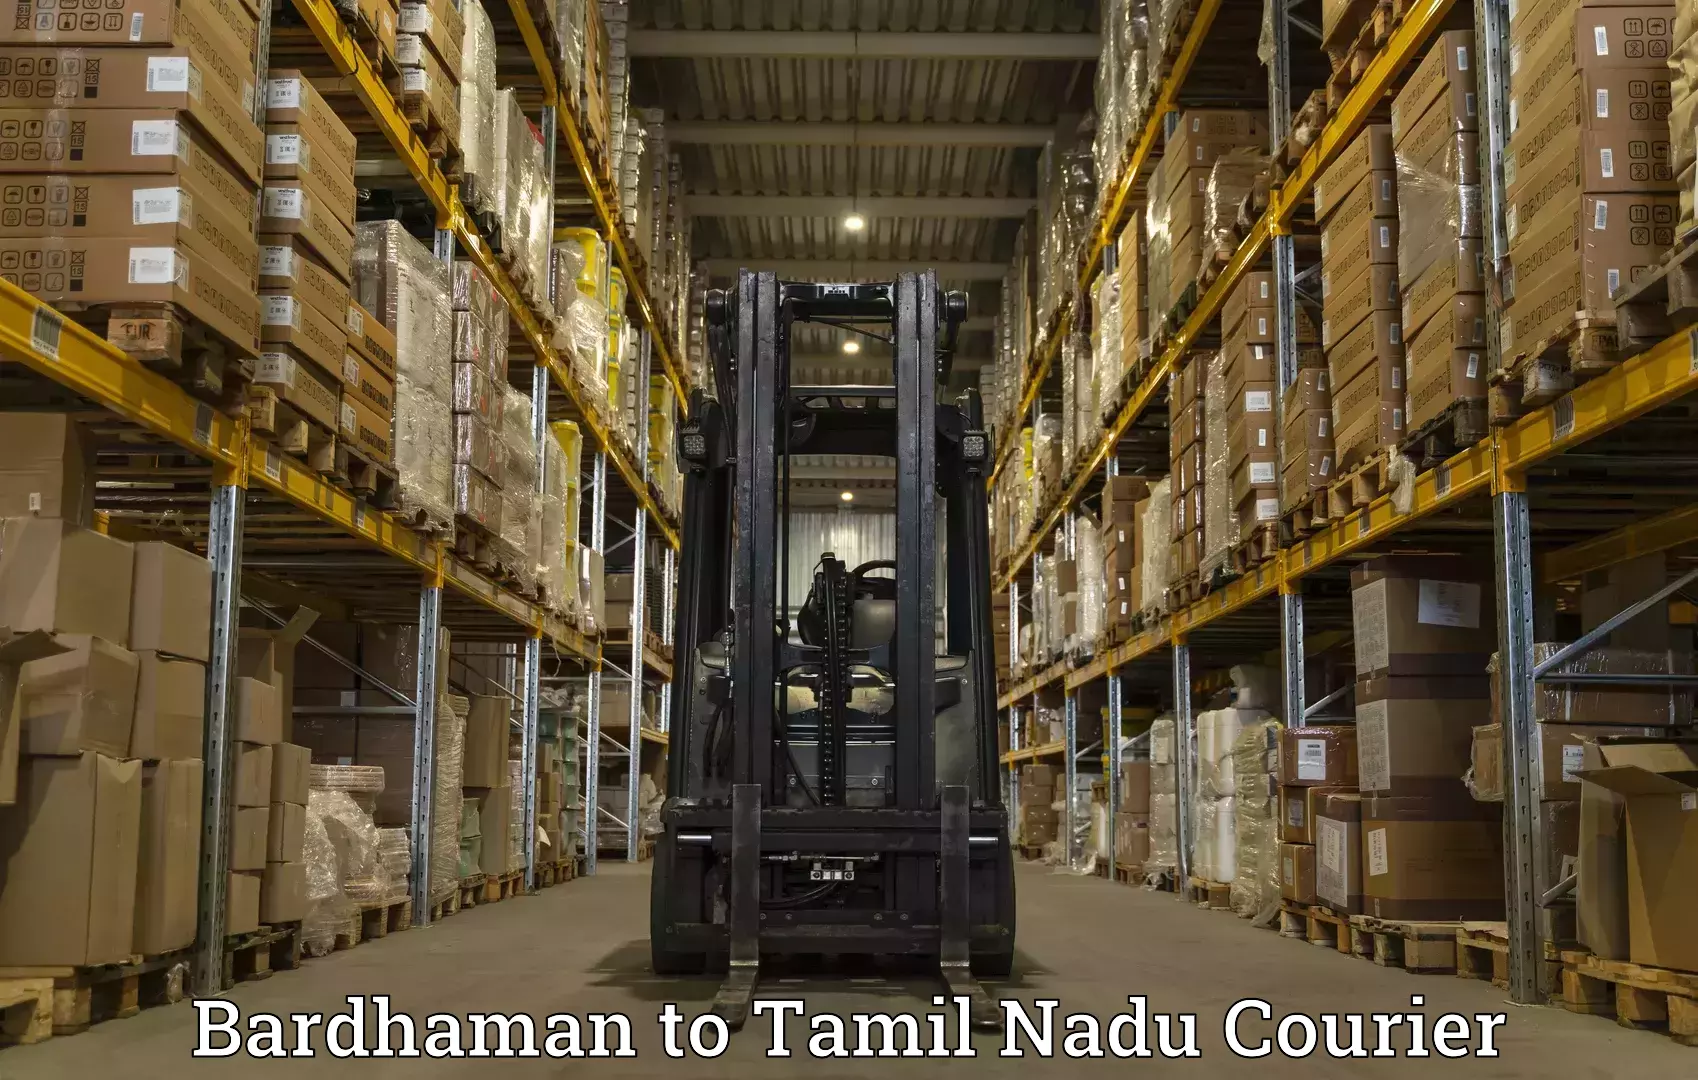 Courier service partnerships Bardhaman to Marakkanam